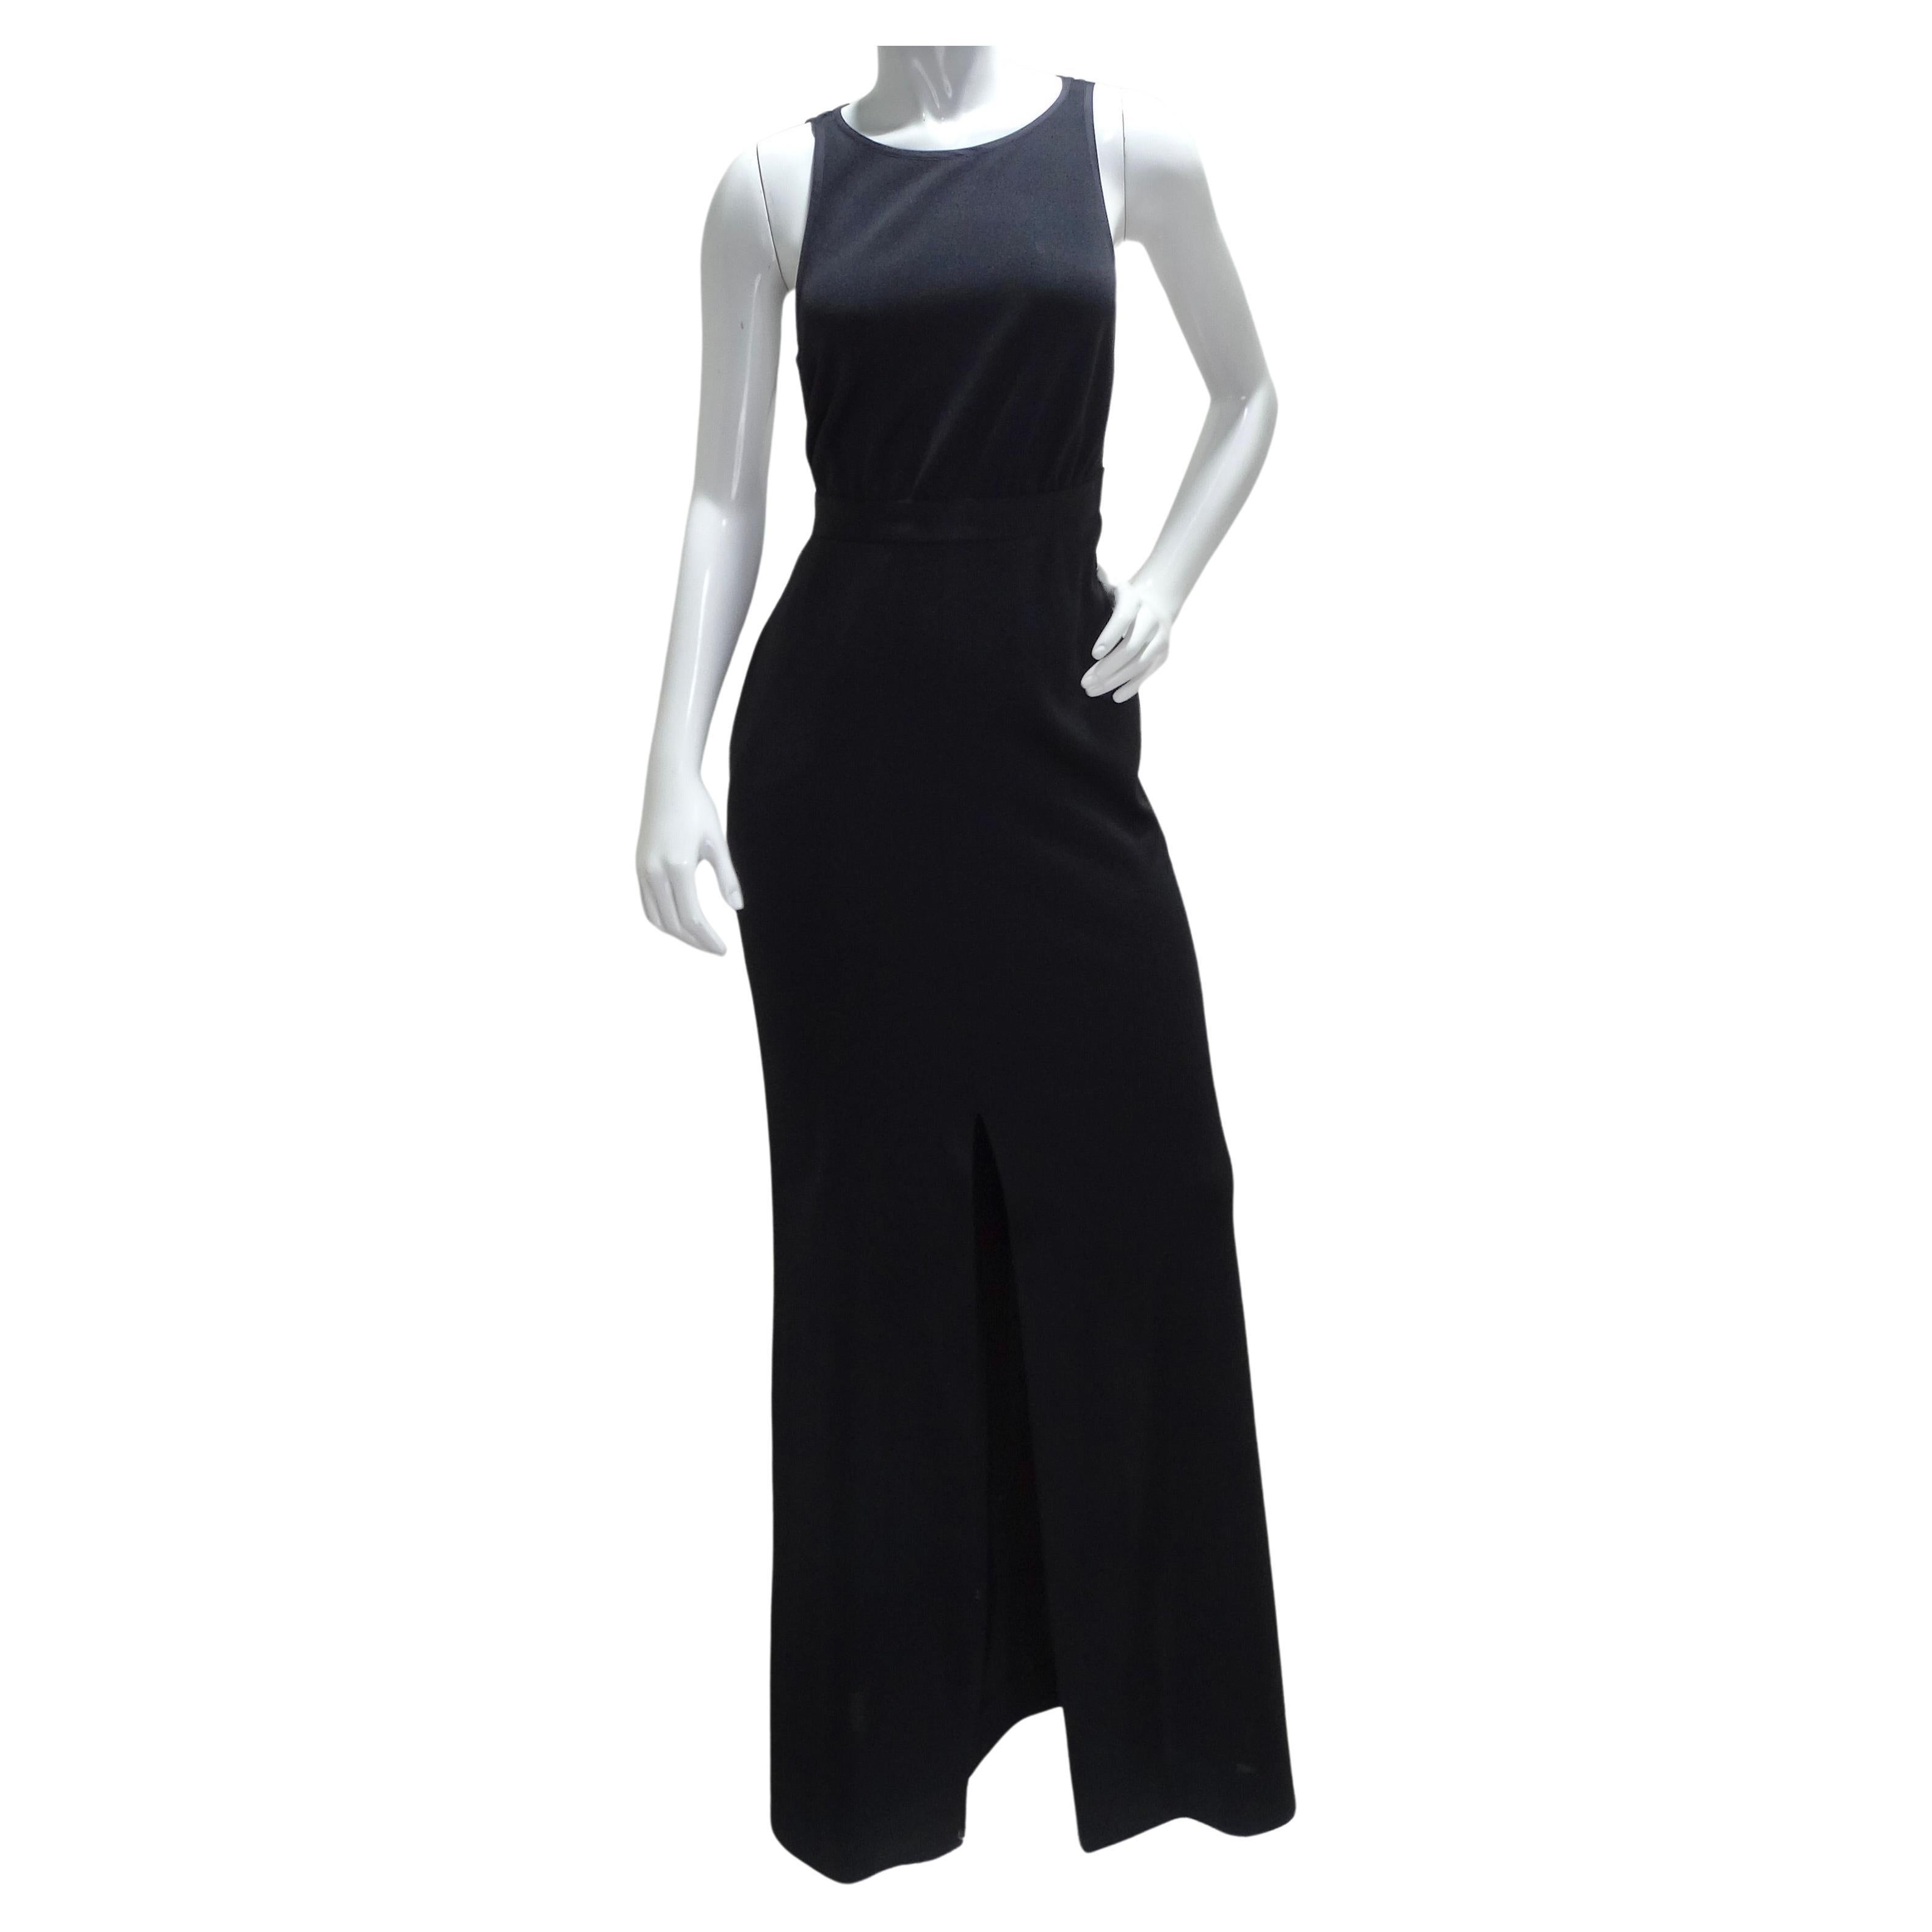 Yves Saint Laurent 1980s Black Backless Evening Dress For Sale